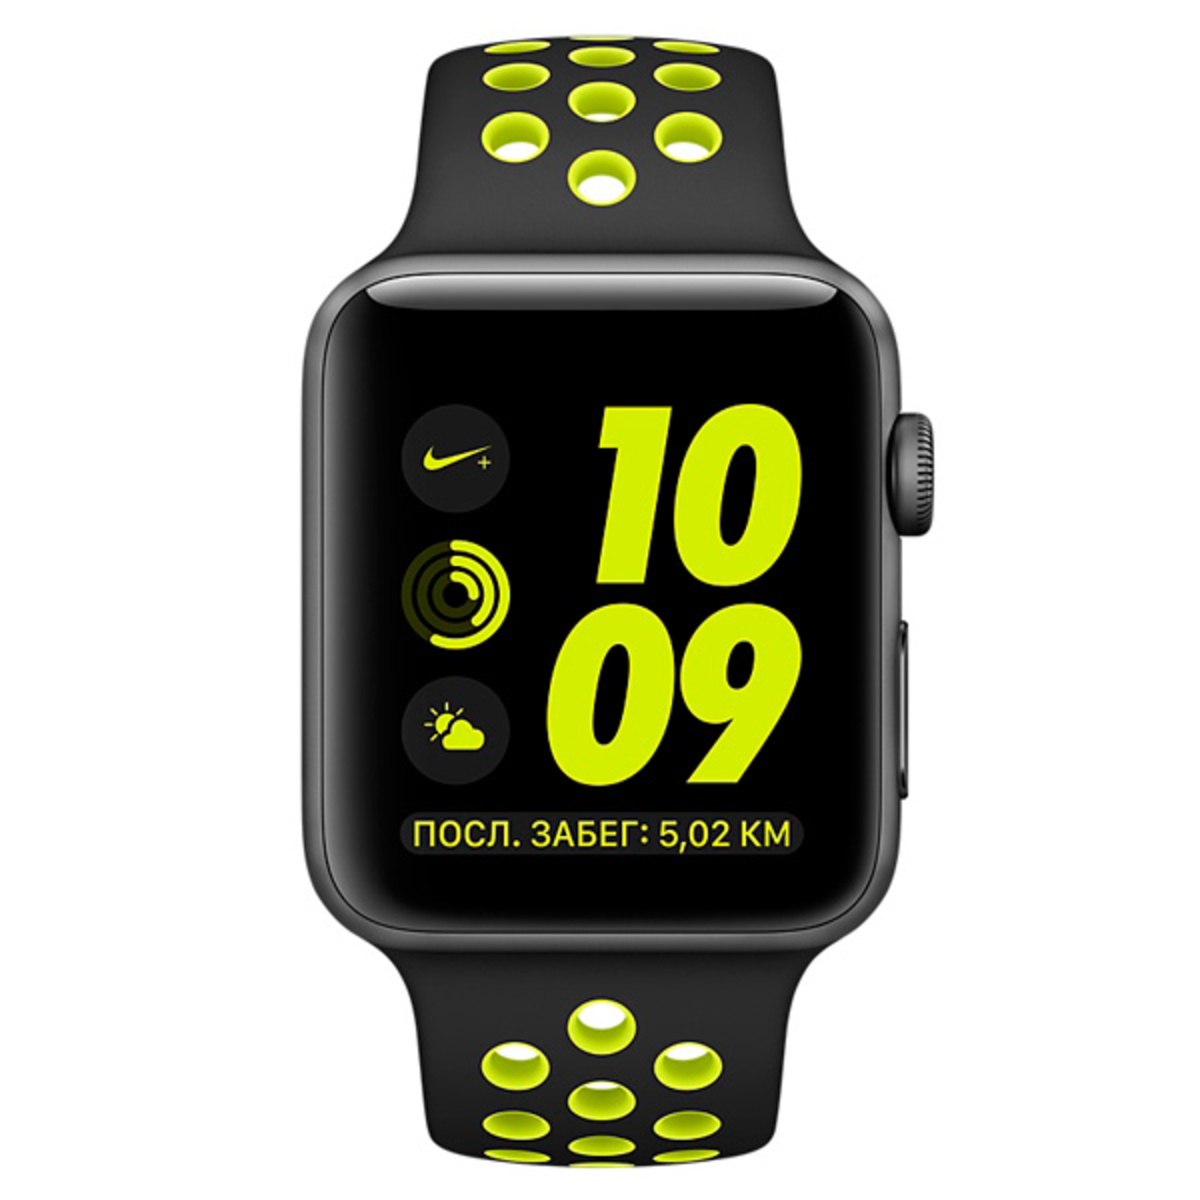 Умные часы Apple Watch Series 2 38mm with Nike Sport Band (Цвет: Space Gray / Black and Volt)